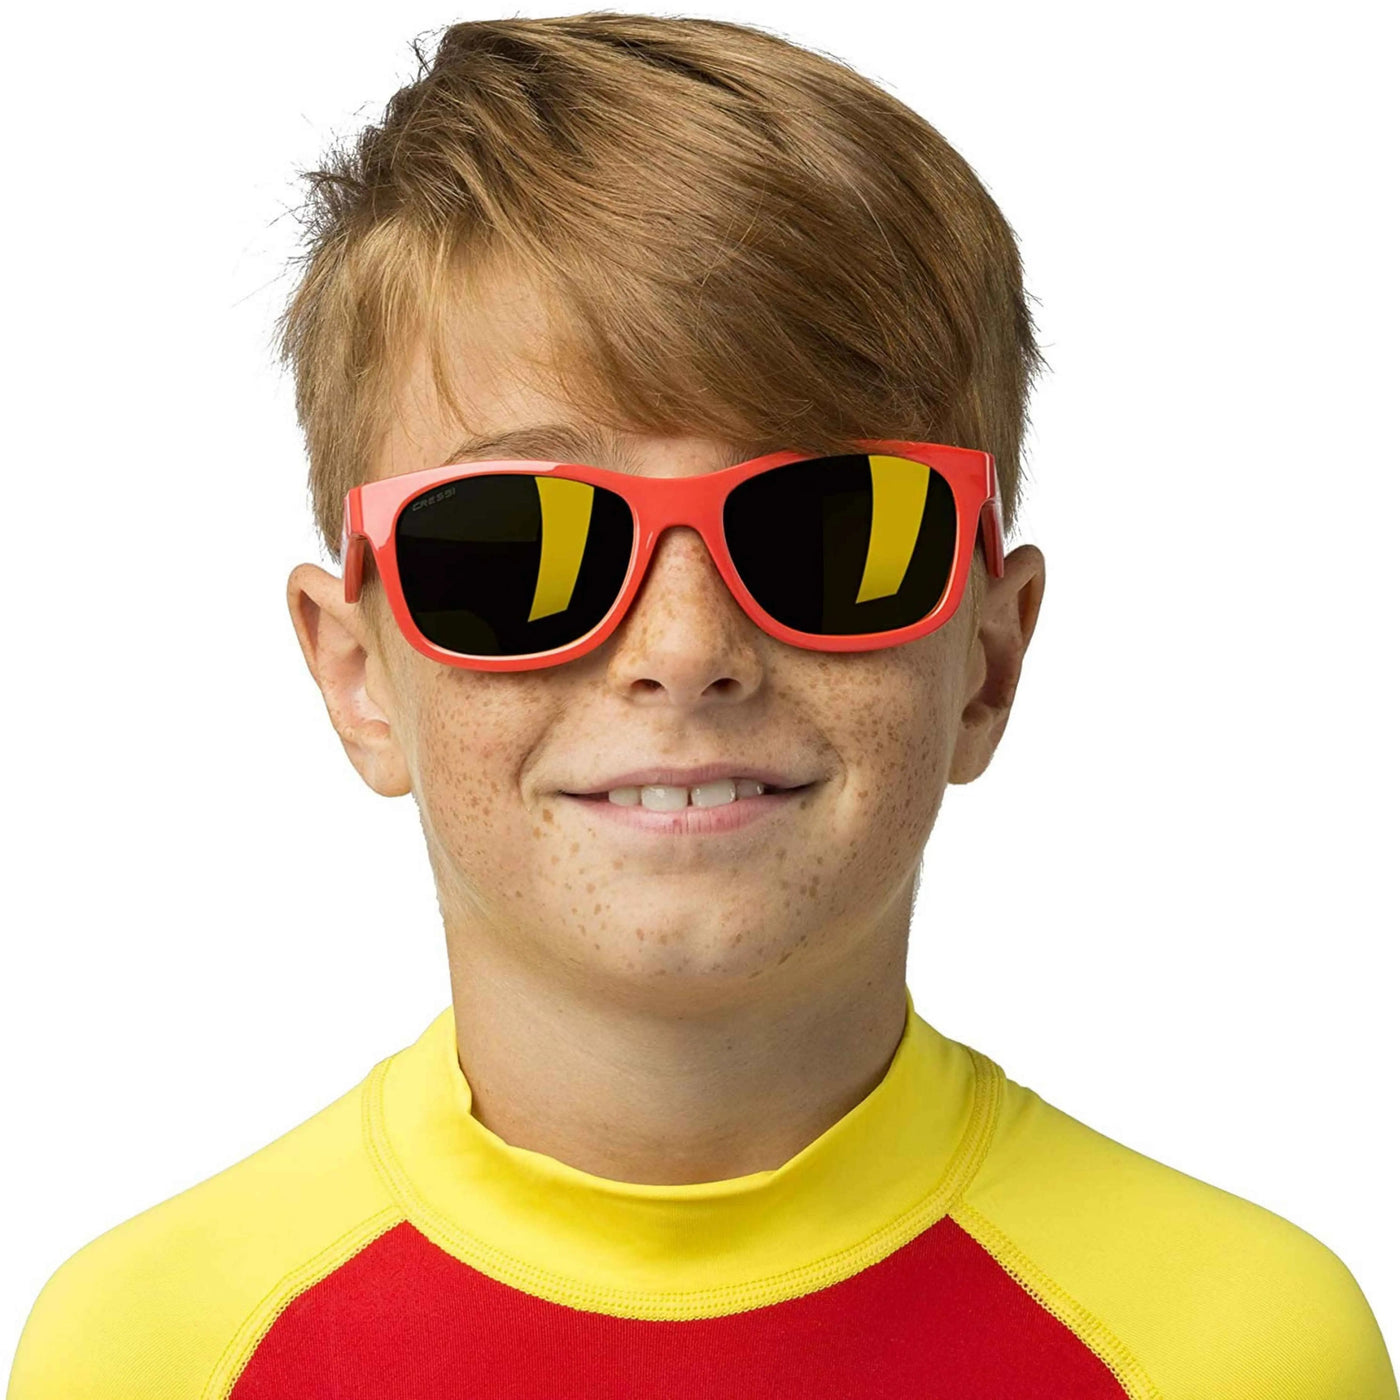 Kids Sunglasses Cressi | KIDDO Cressi